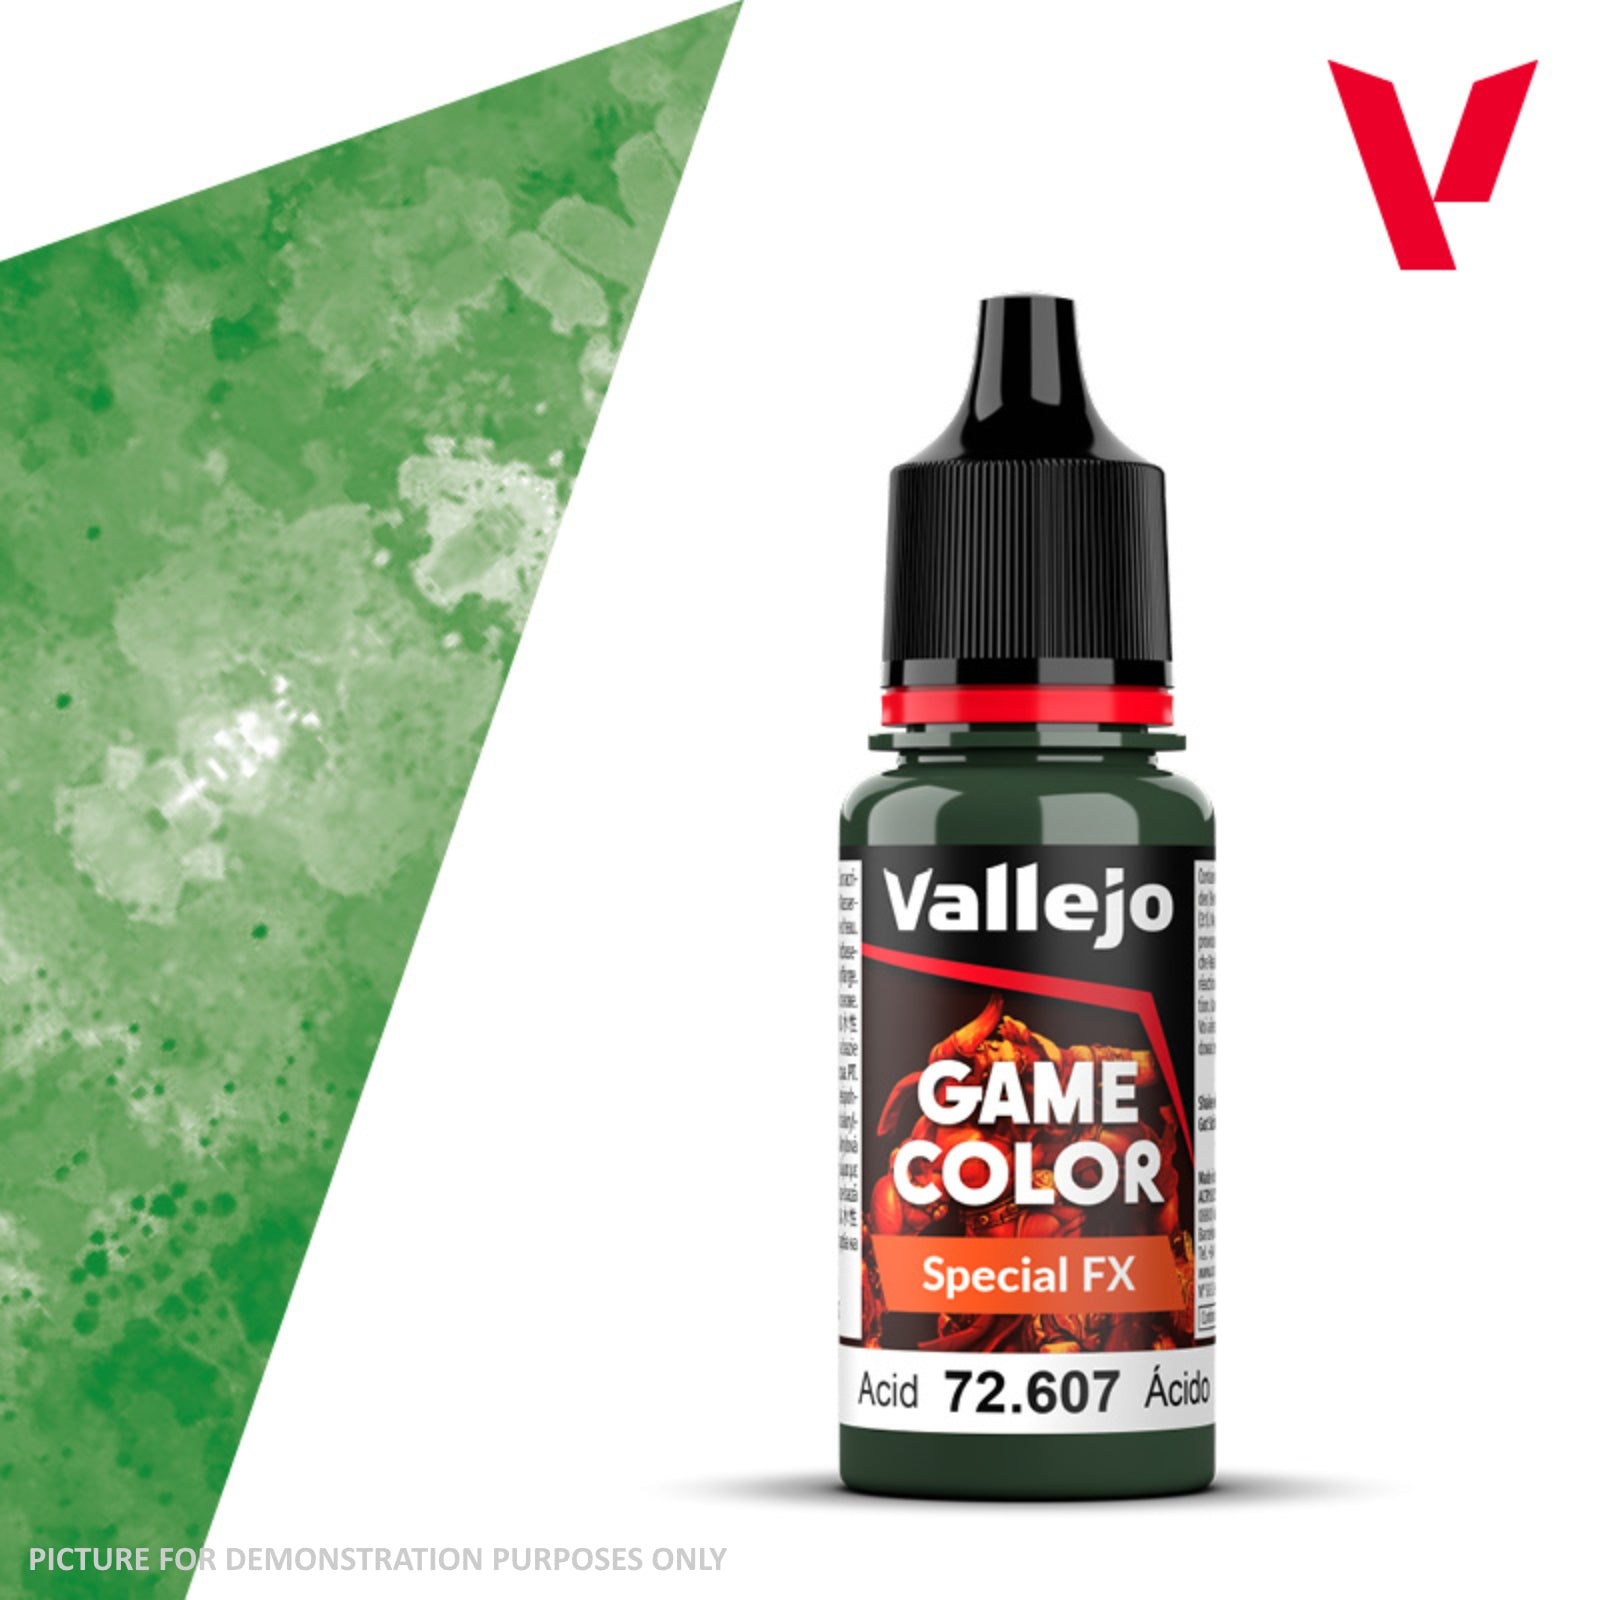 Vallejo Game Colour Special FX - 72.607 Acid 18ml